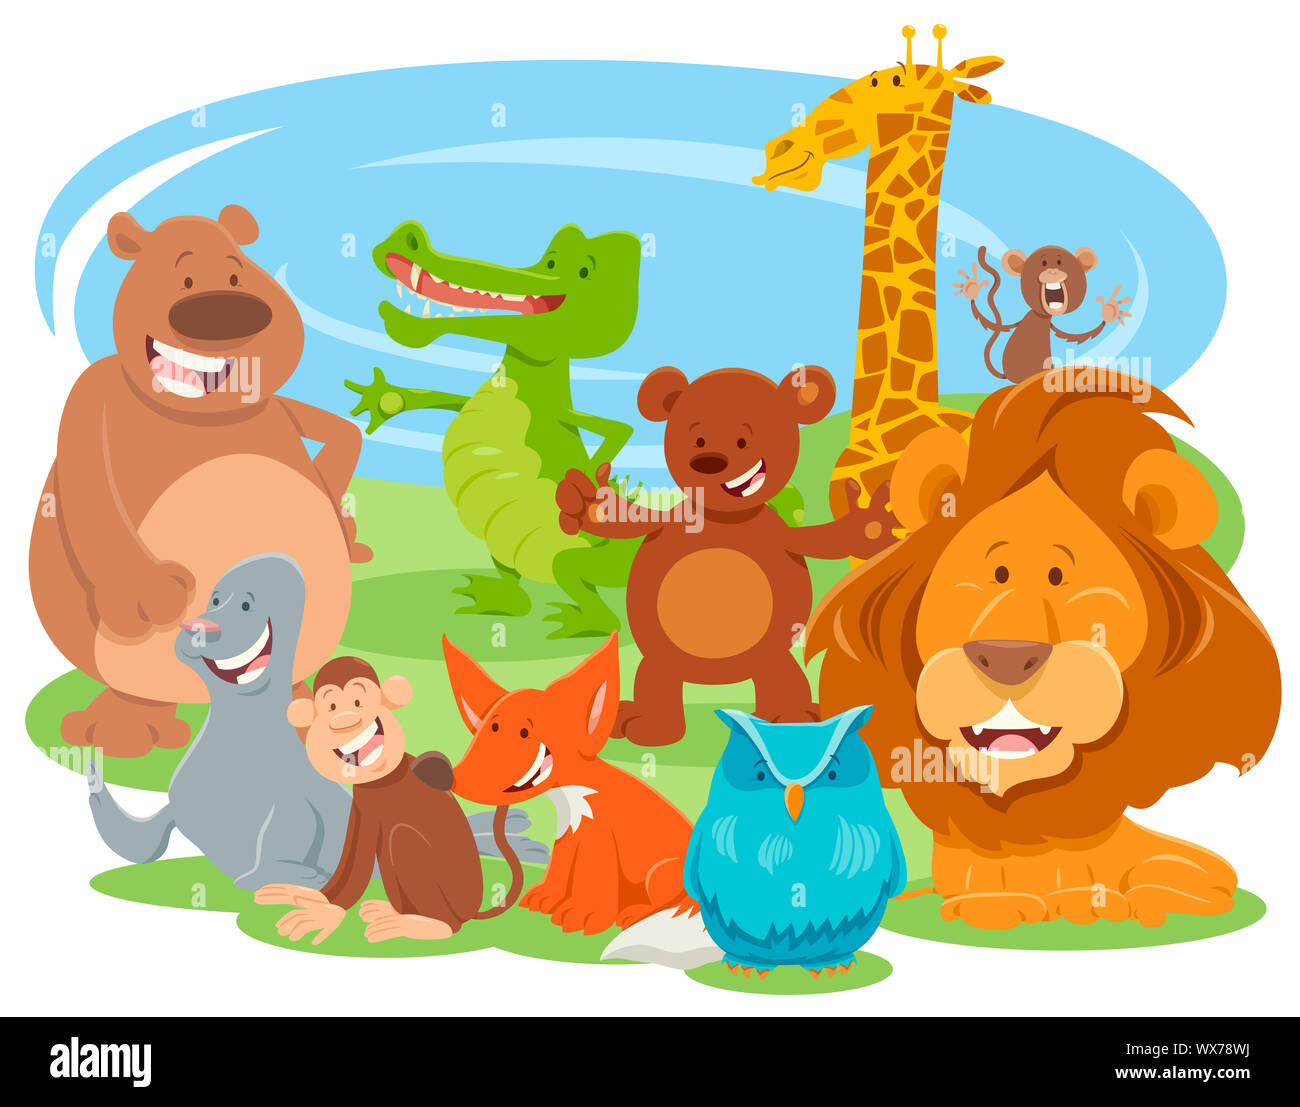 funny comic animal characters group Stock Photo